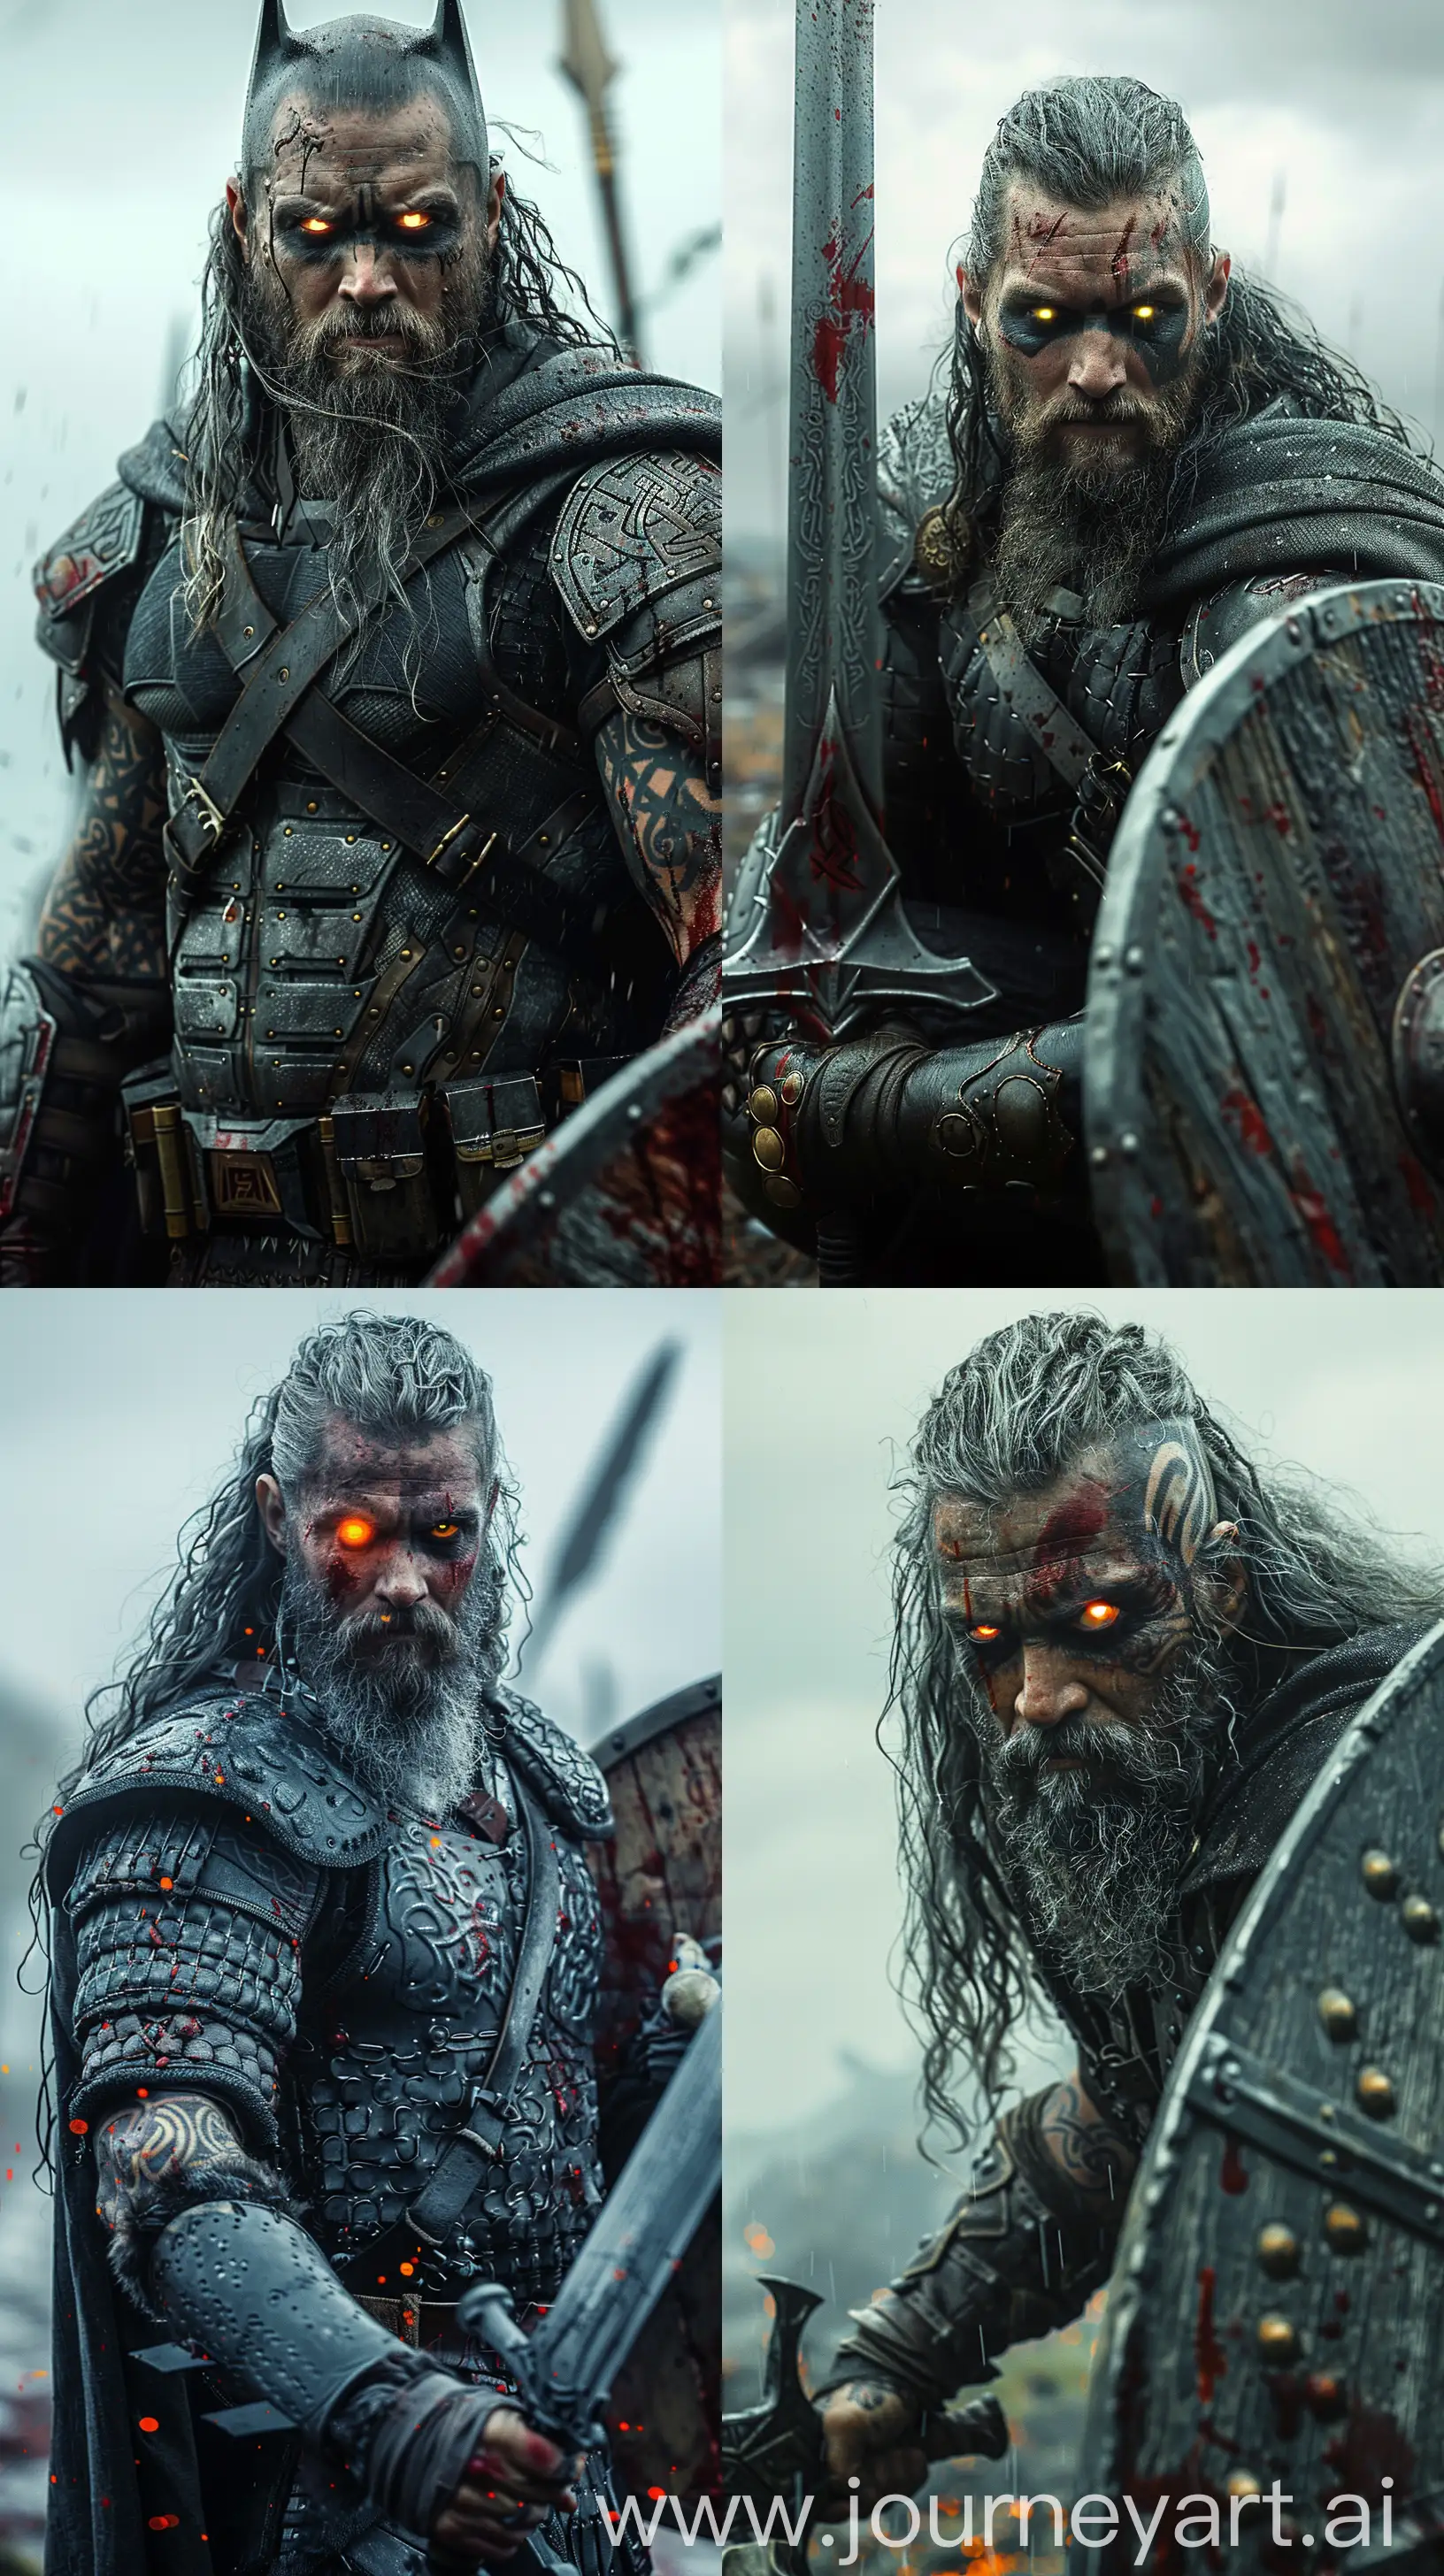 Intense-Batman-Viking-Warrior-with-Glowing-Eyes-in-Bloody-Battle-Zone